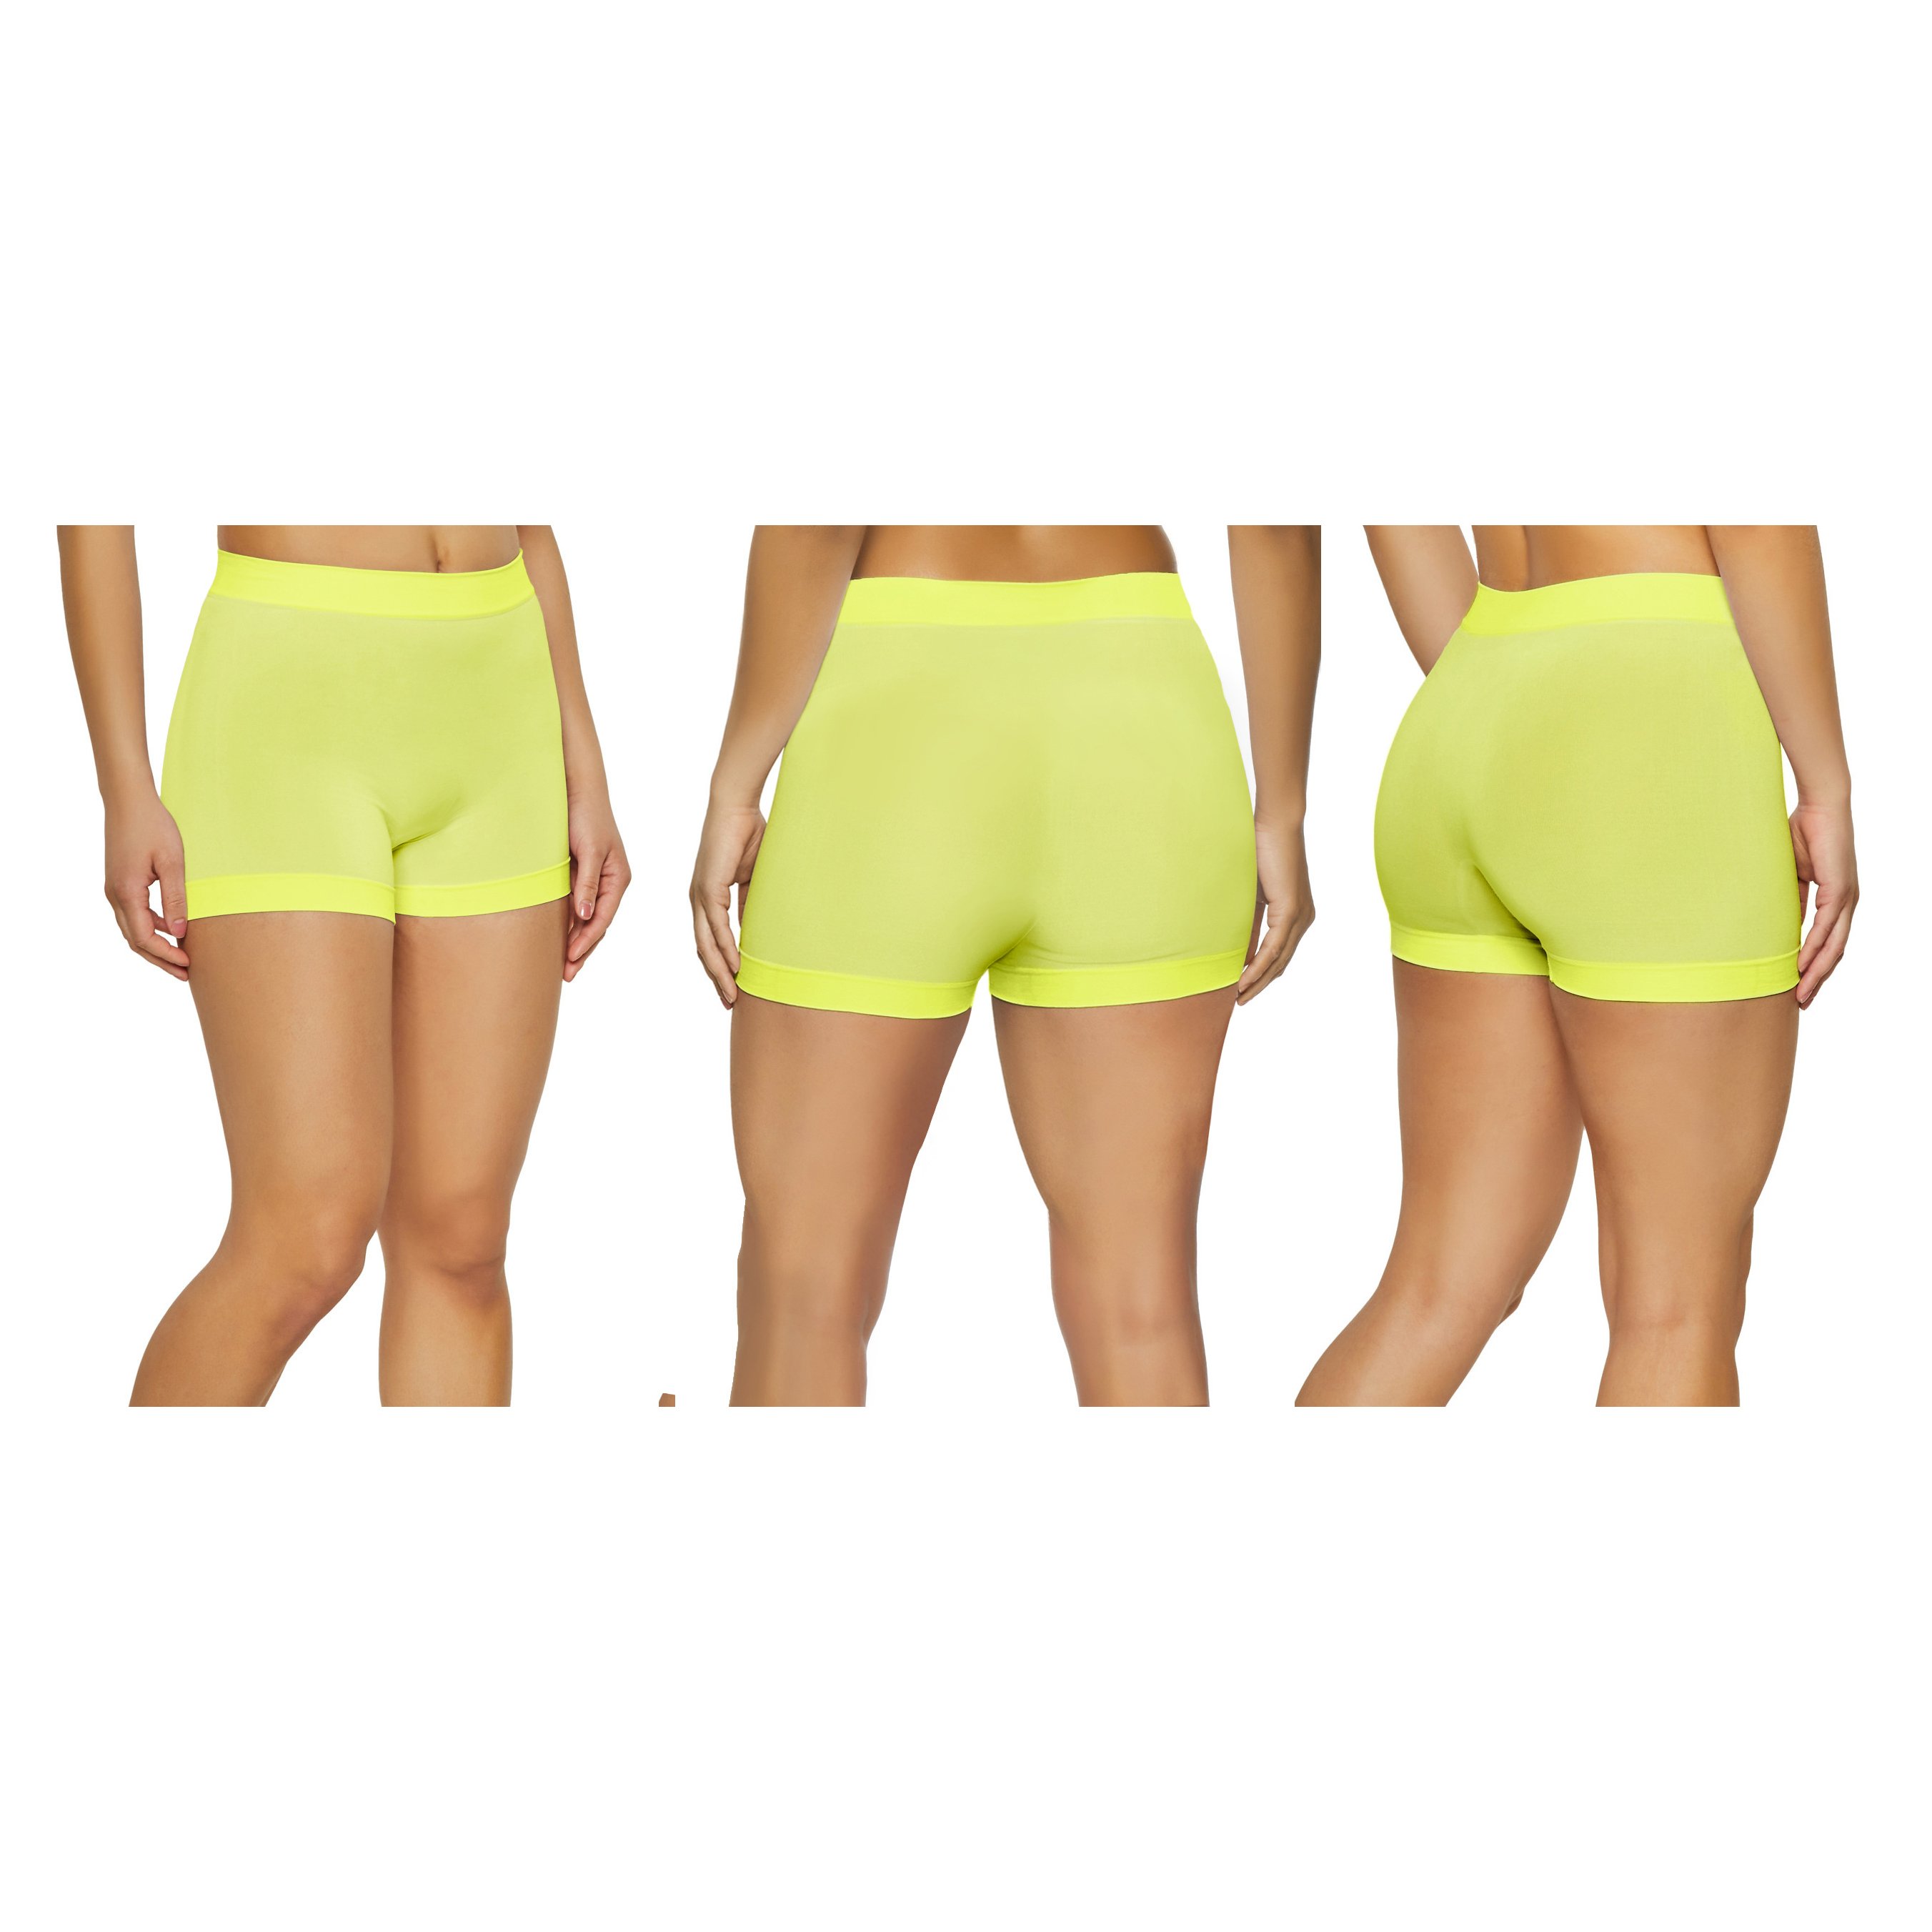 12-Pack Women's High Waisted Biker Bottom Shorts For Yoga Gym Running Ladies Pants - YELLOW, M